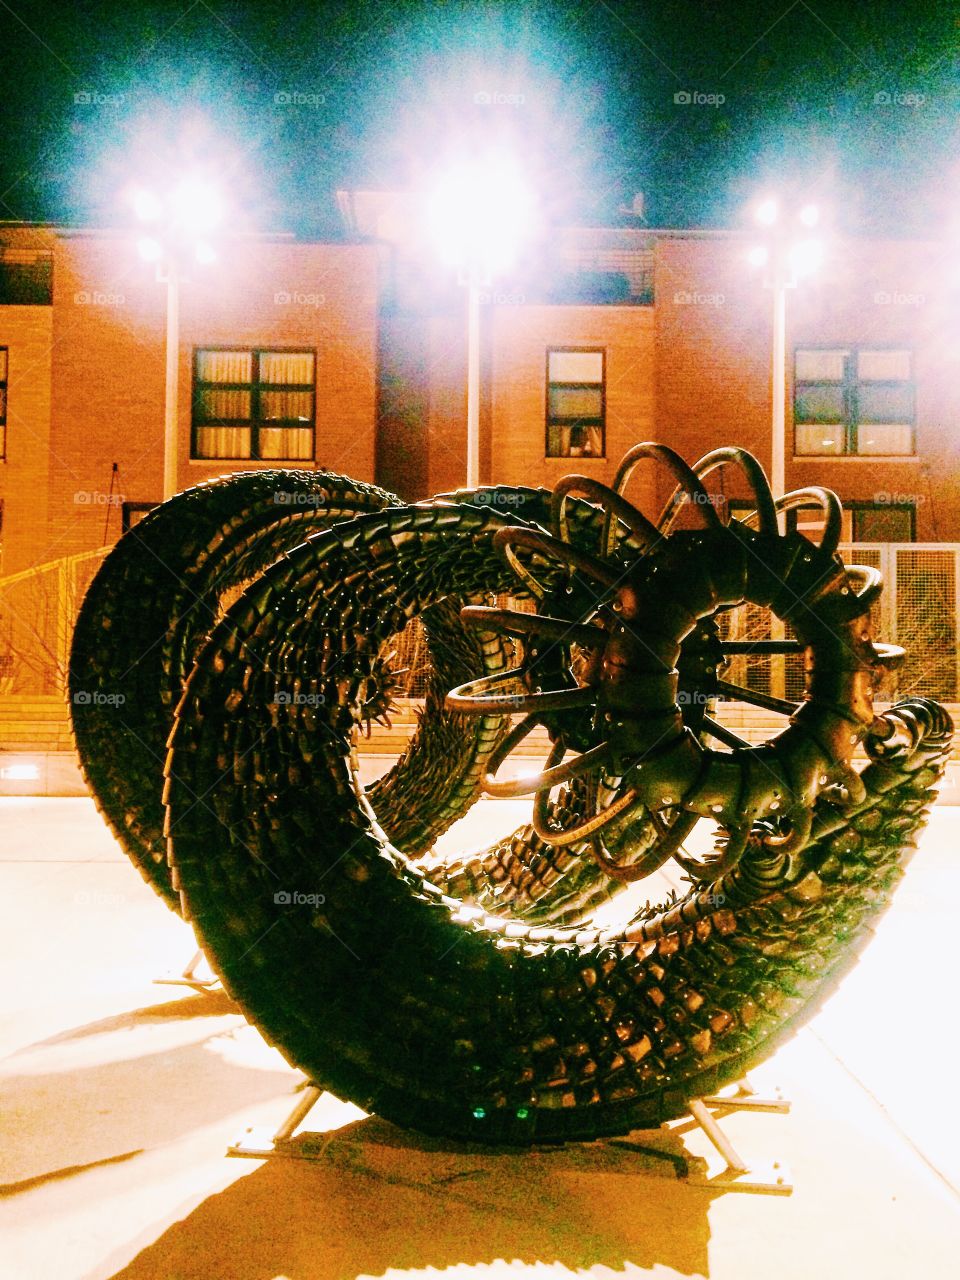 Tire sculpture of Wicker Park Chicago